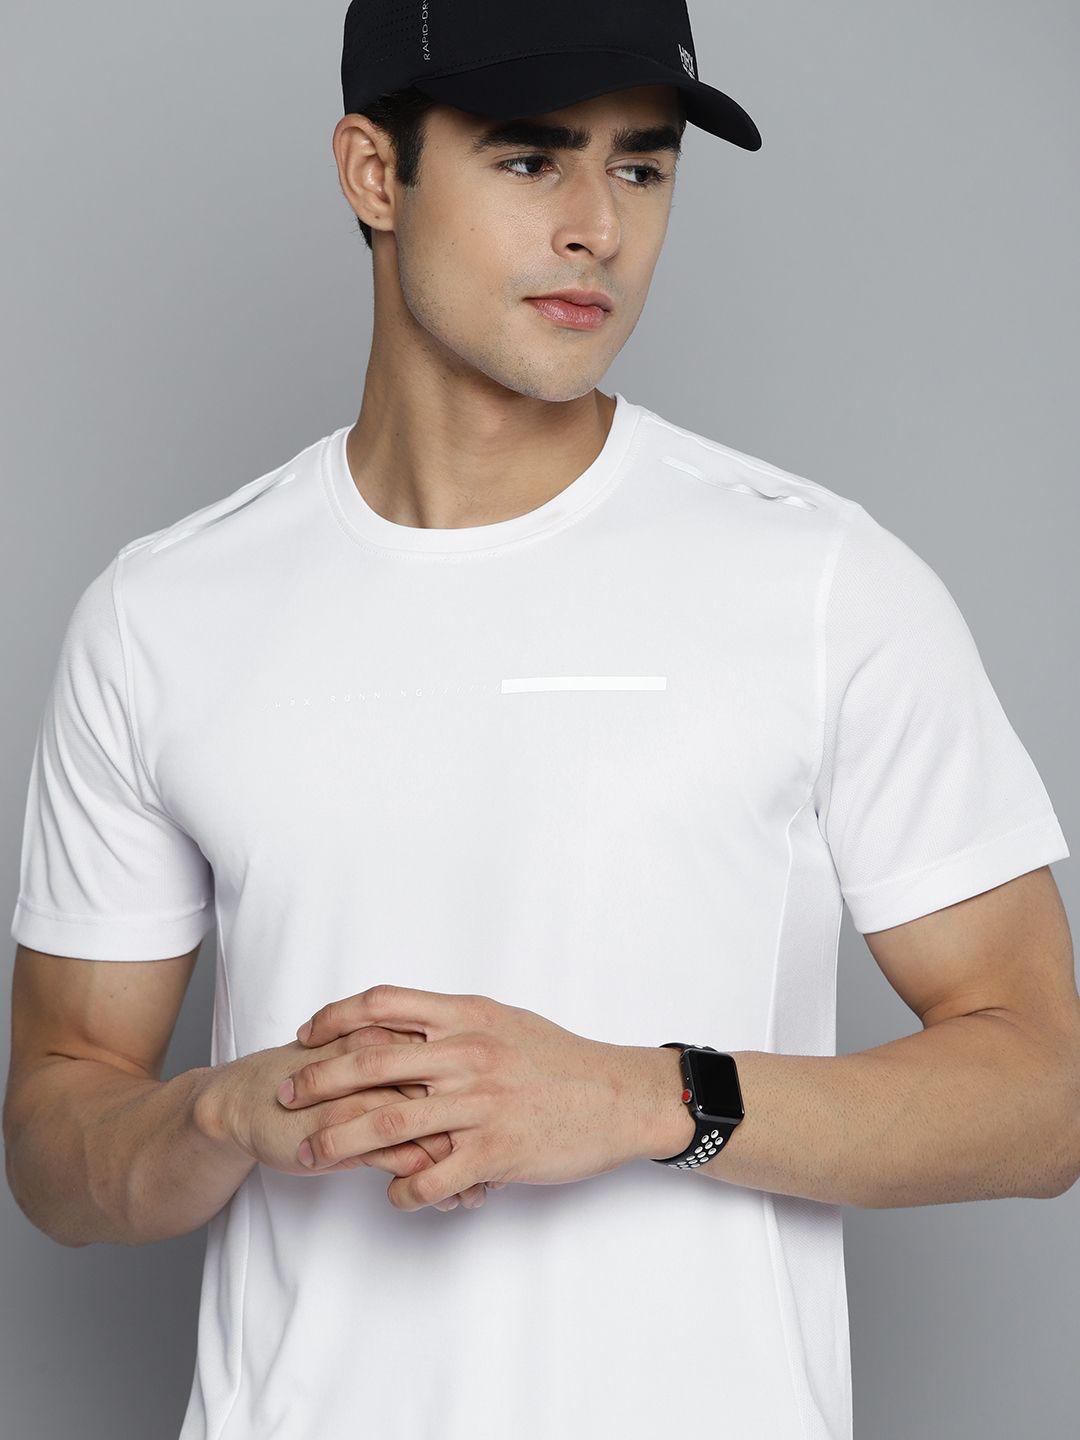 hrx by hrithik roshan men white t-shirt